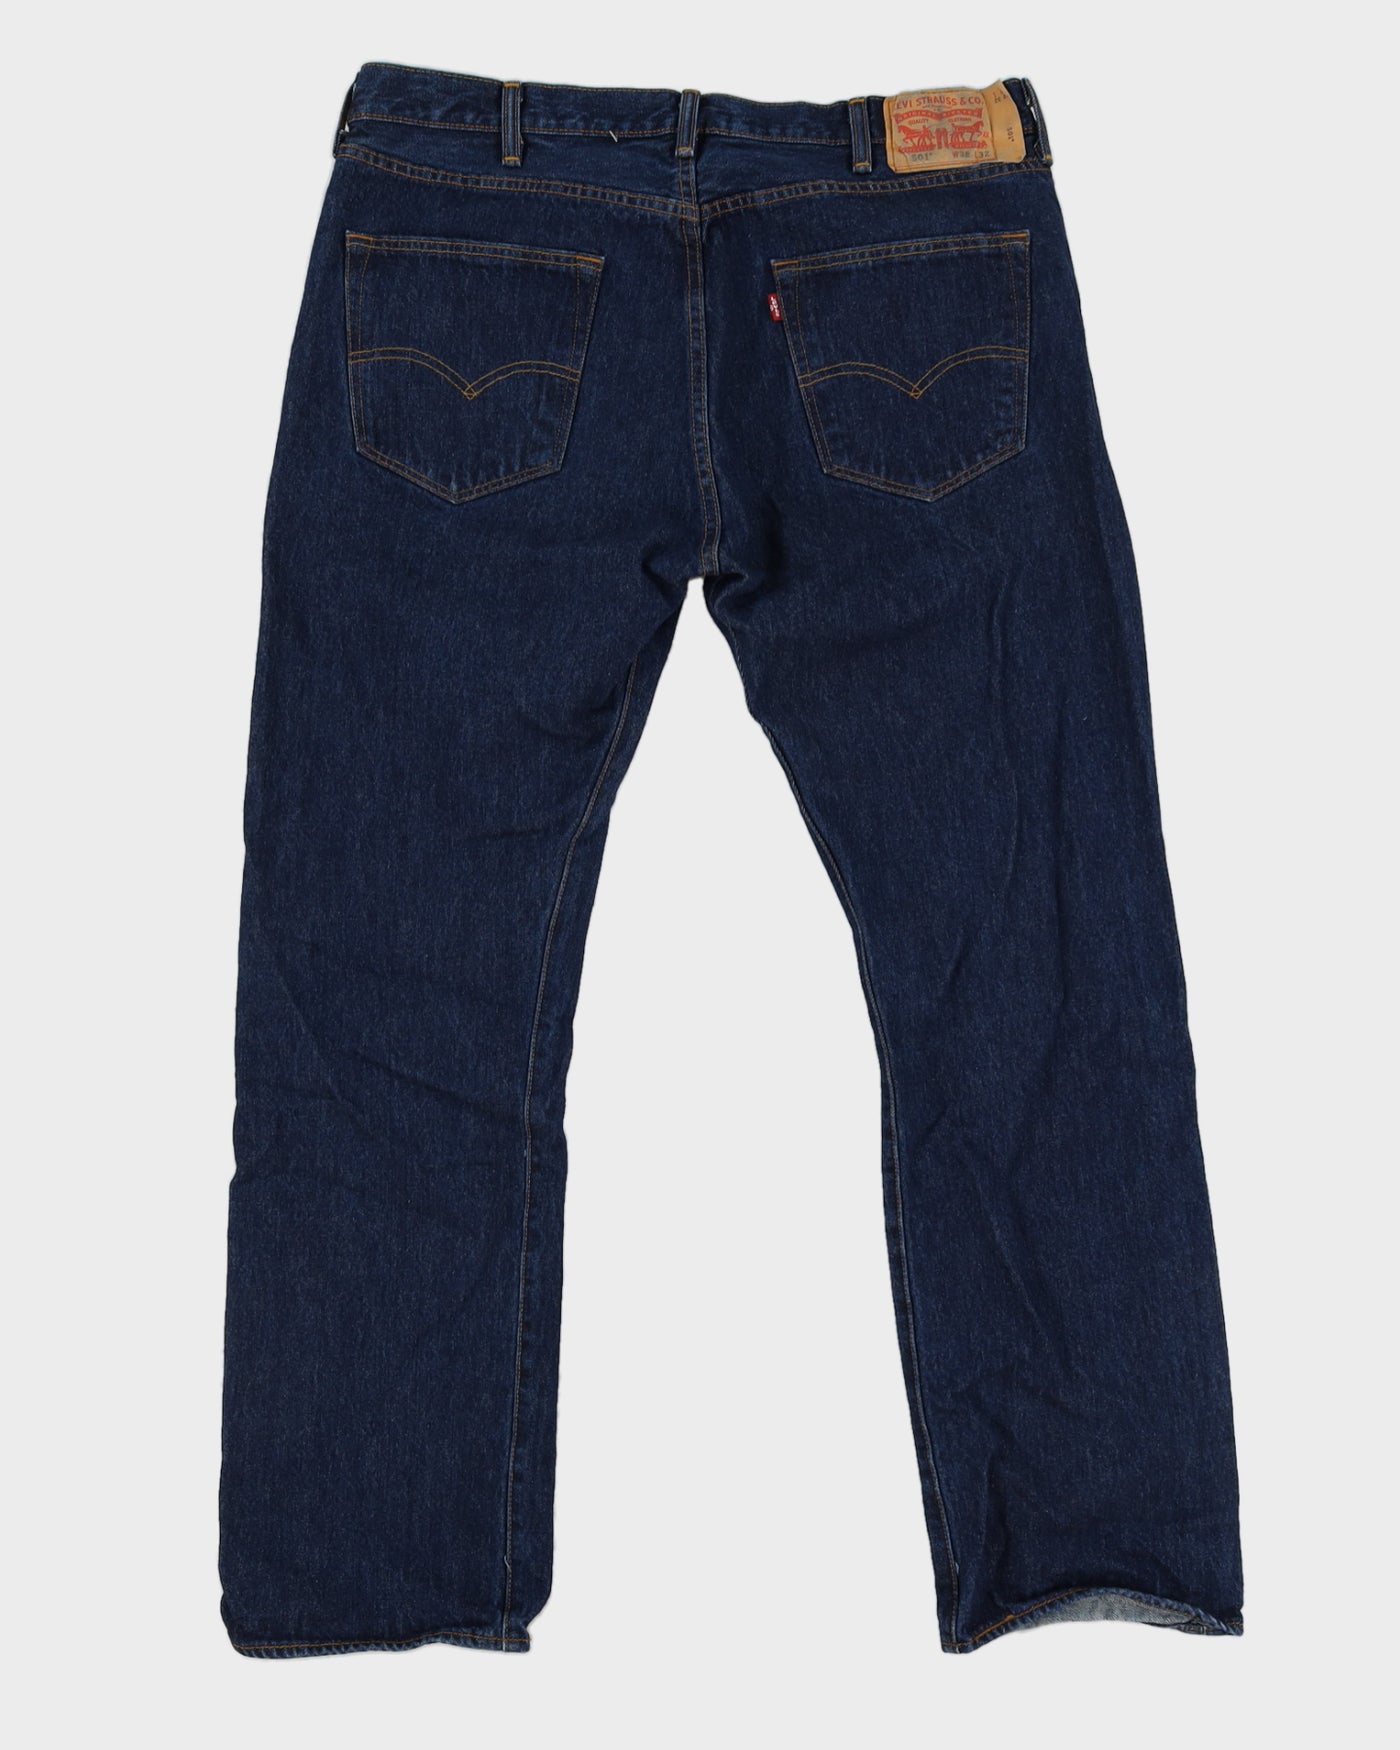 Levi's 501 Blue Dark Washed Jeans - W38 L32